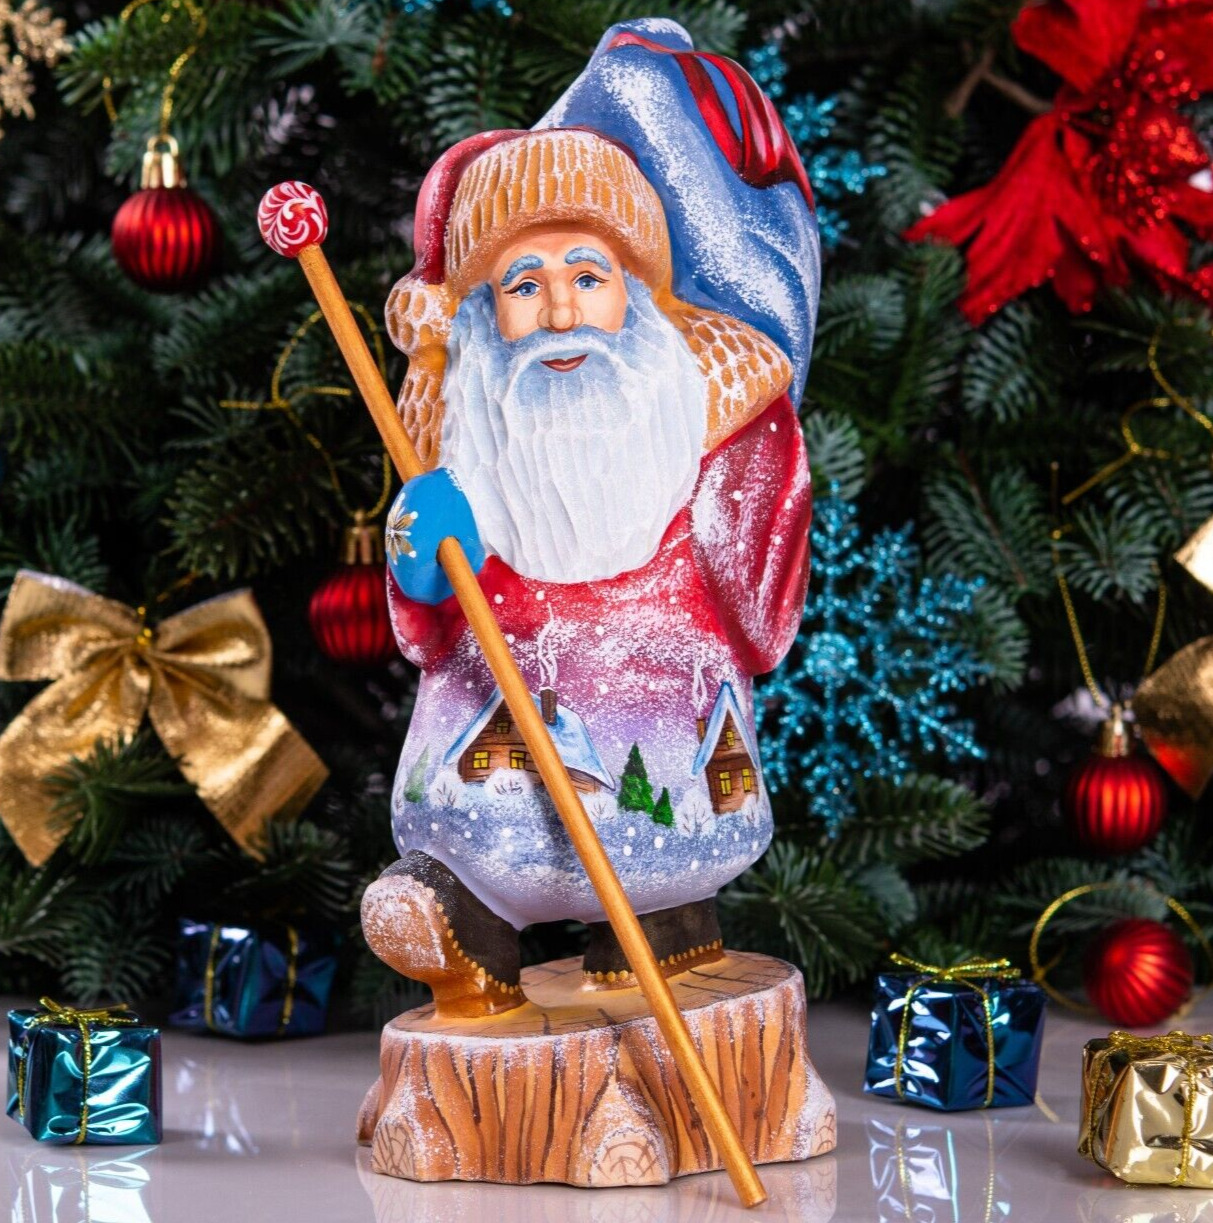 Wooden hand carved Santa Claus figurine, handmade Christmas Holiday Home Decor